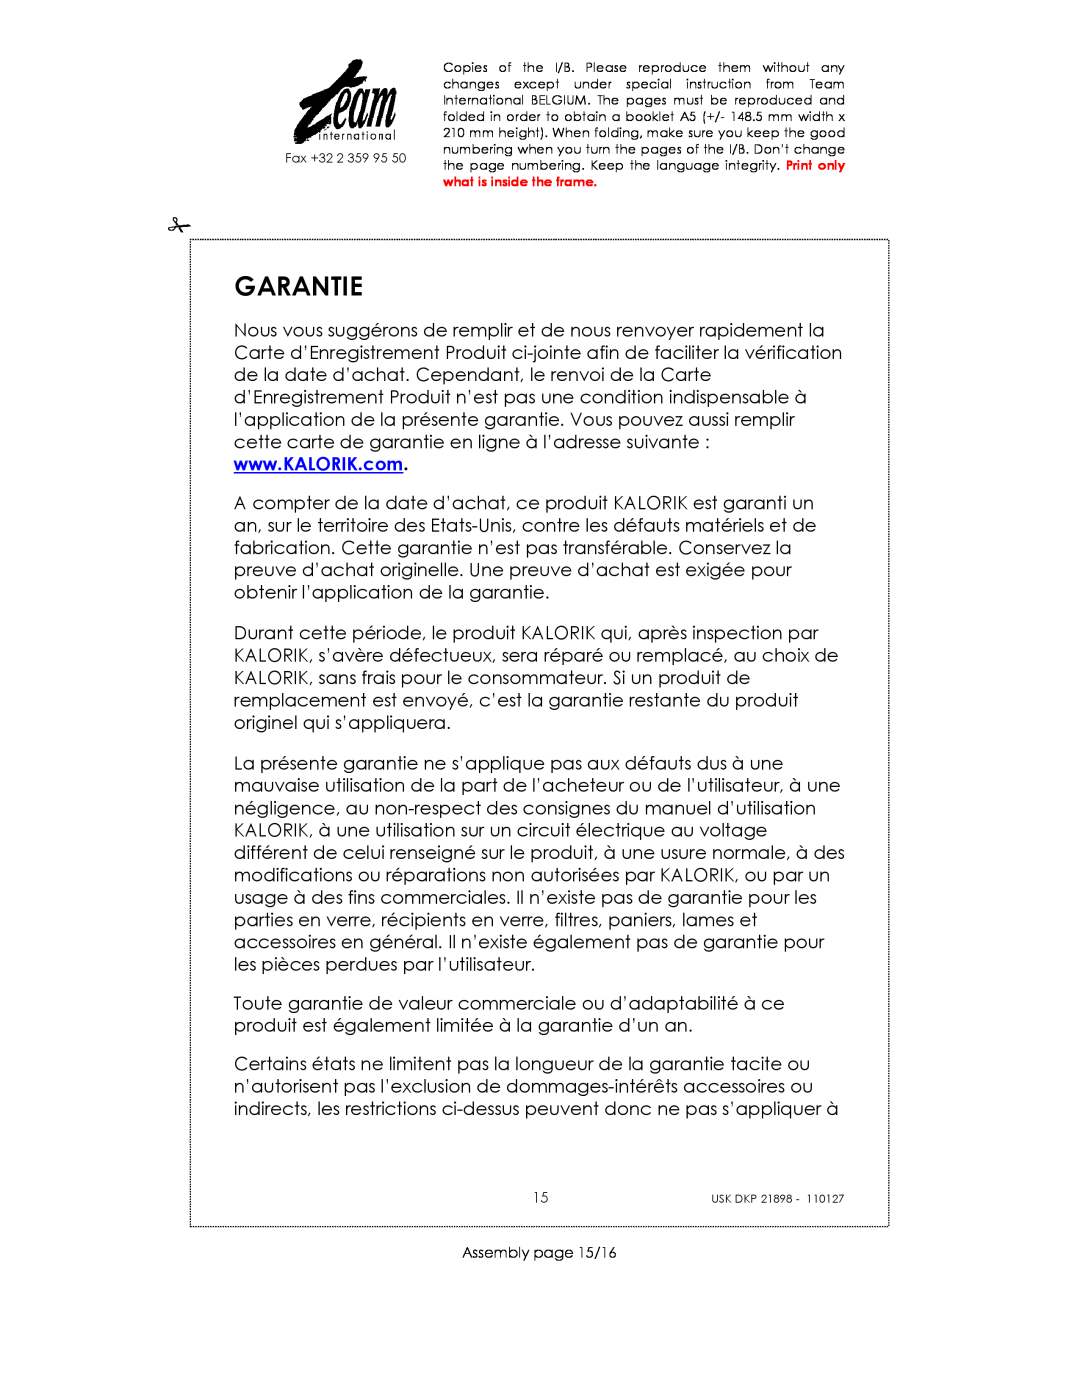 Kalorik USK DKP 21898 manual Garantie, Assembly page 15/16 